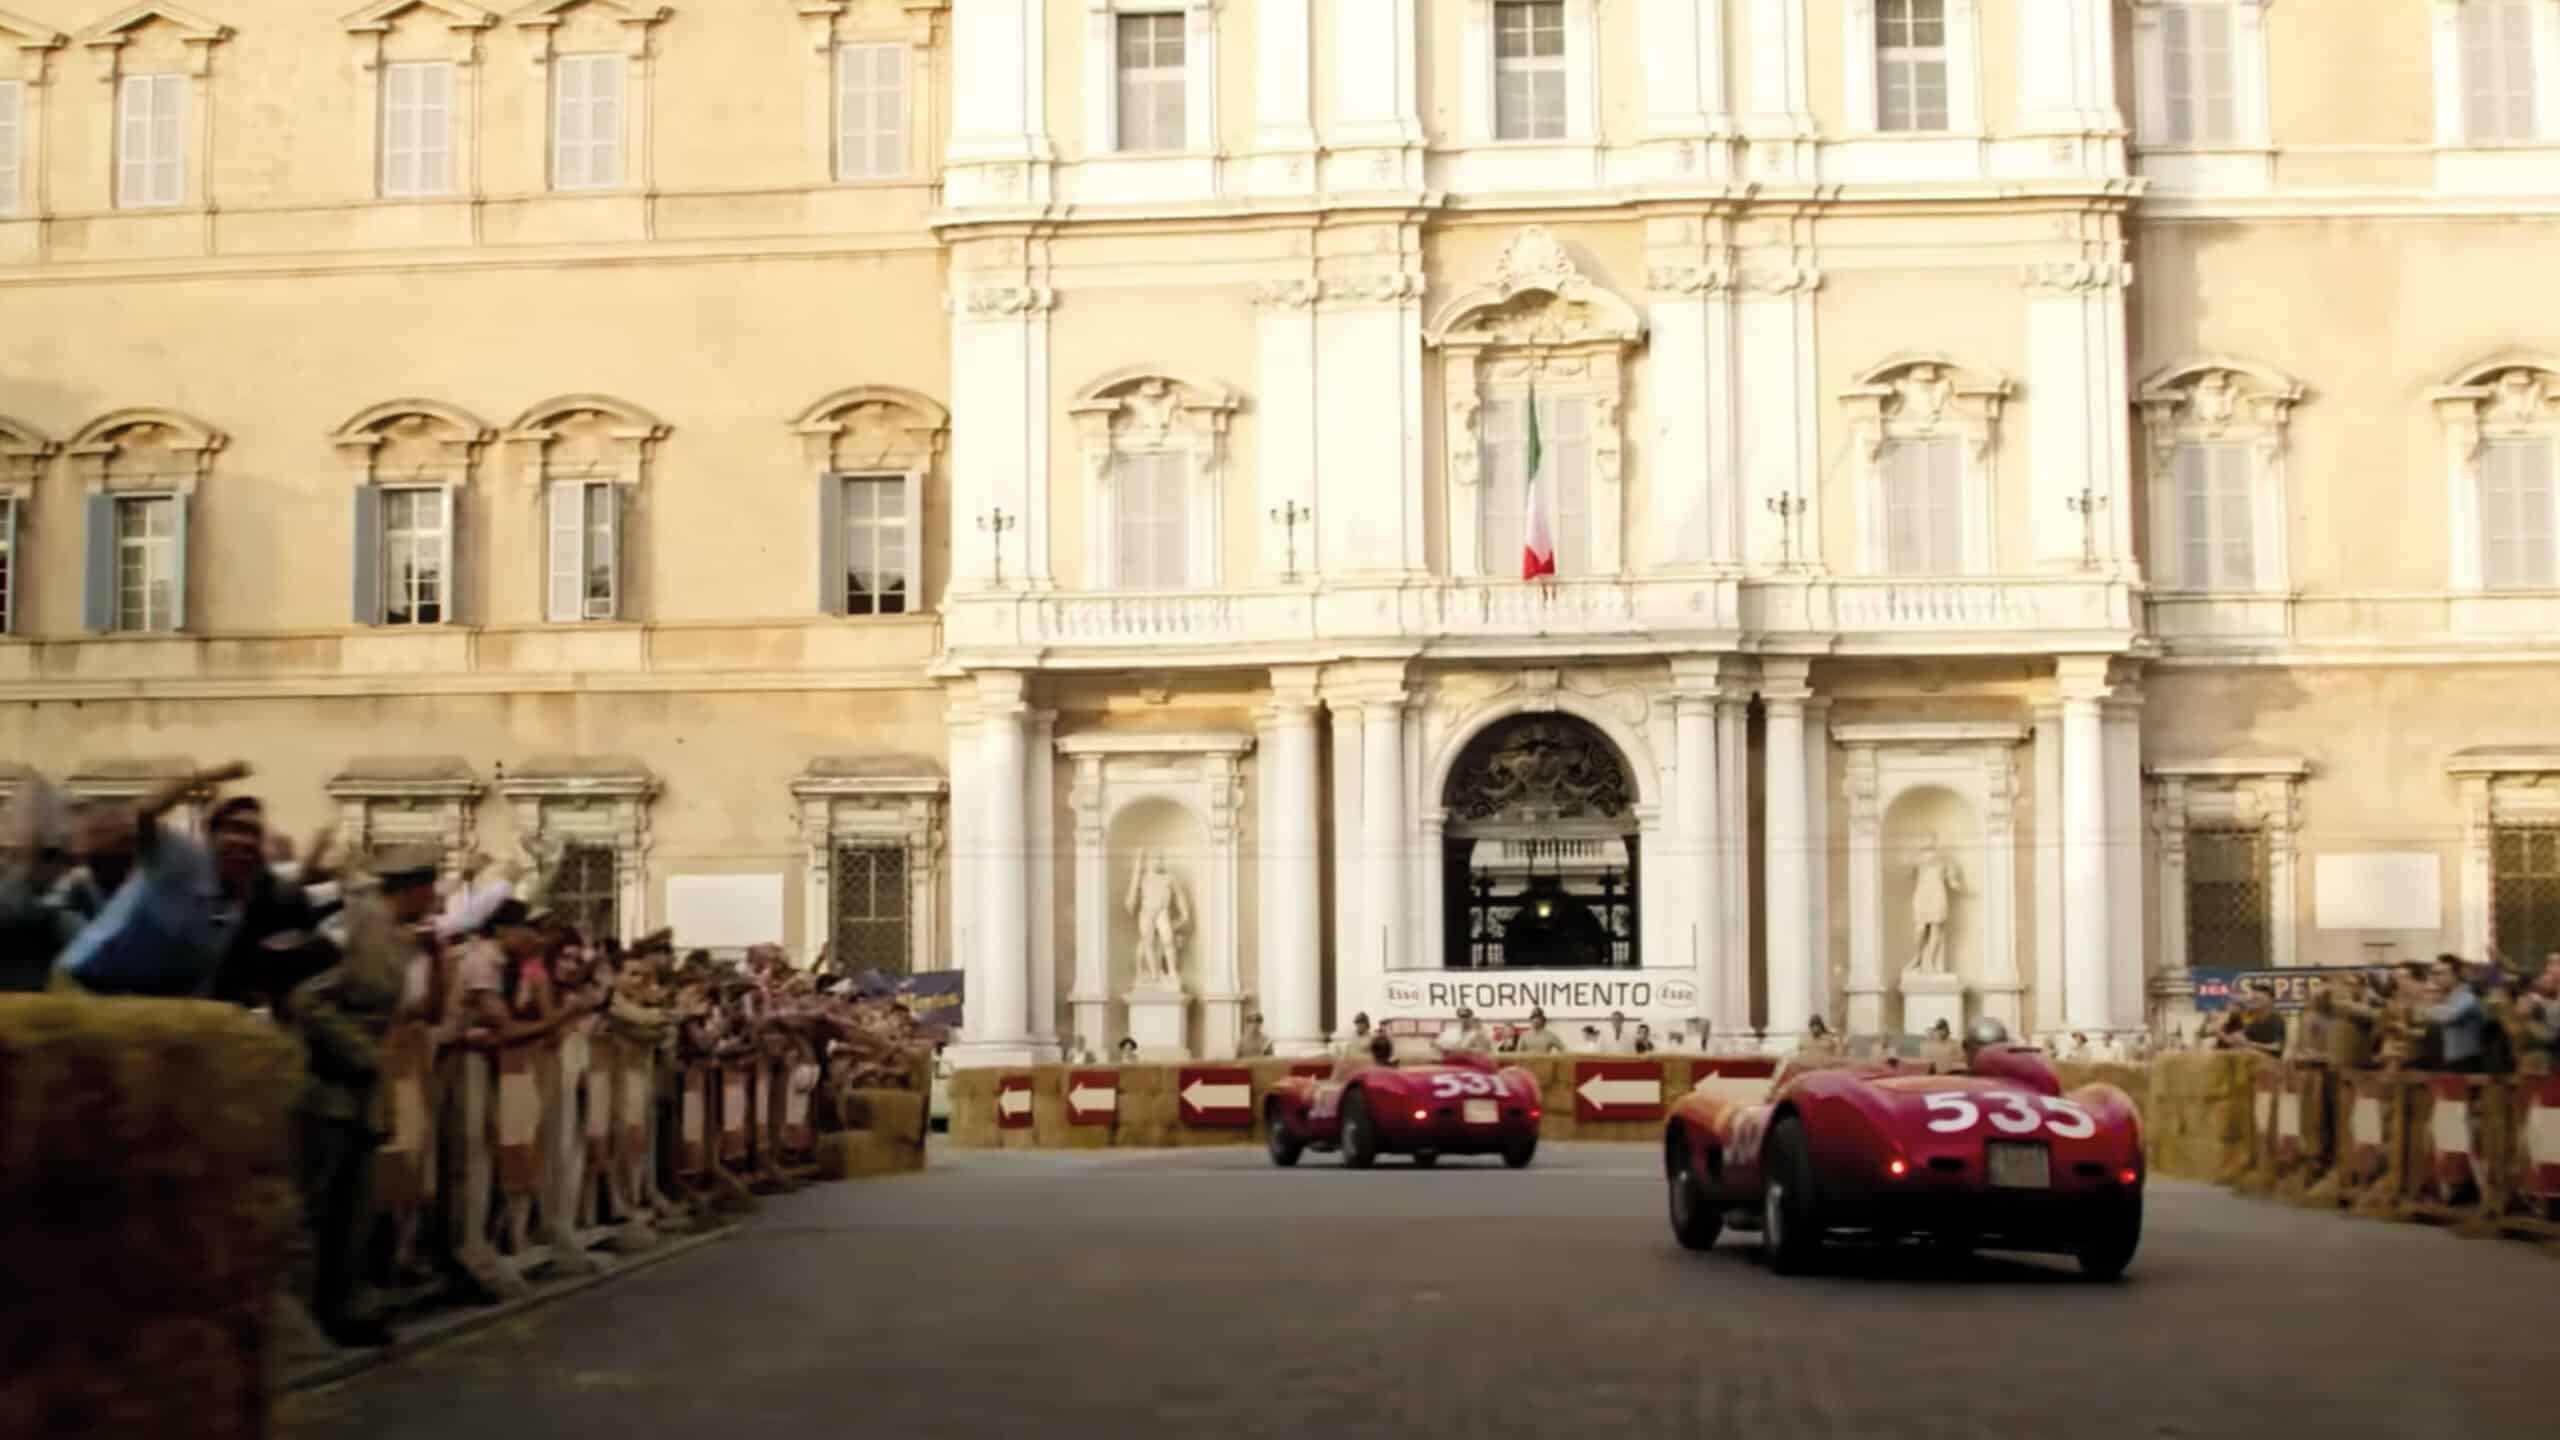 Film review: Michael Mann's Ferrari struggles to unpack Il Commendatore